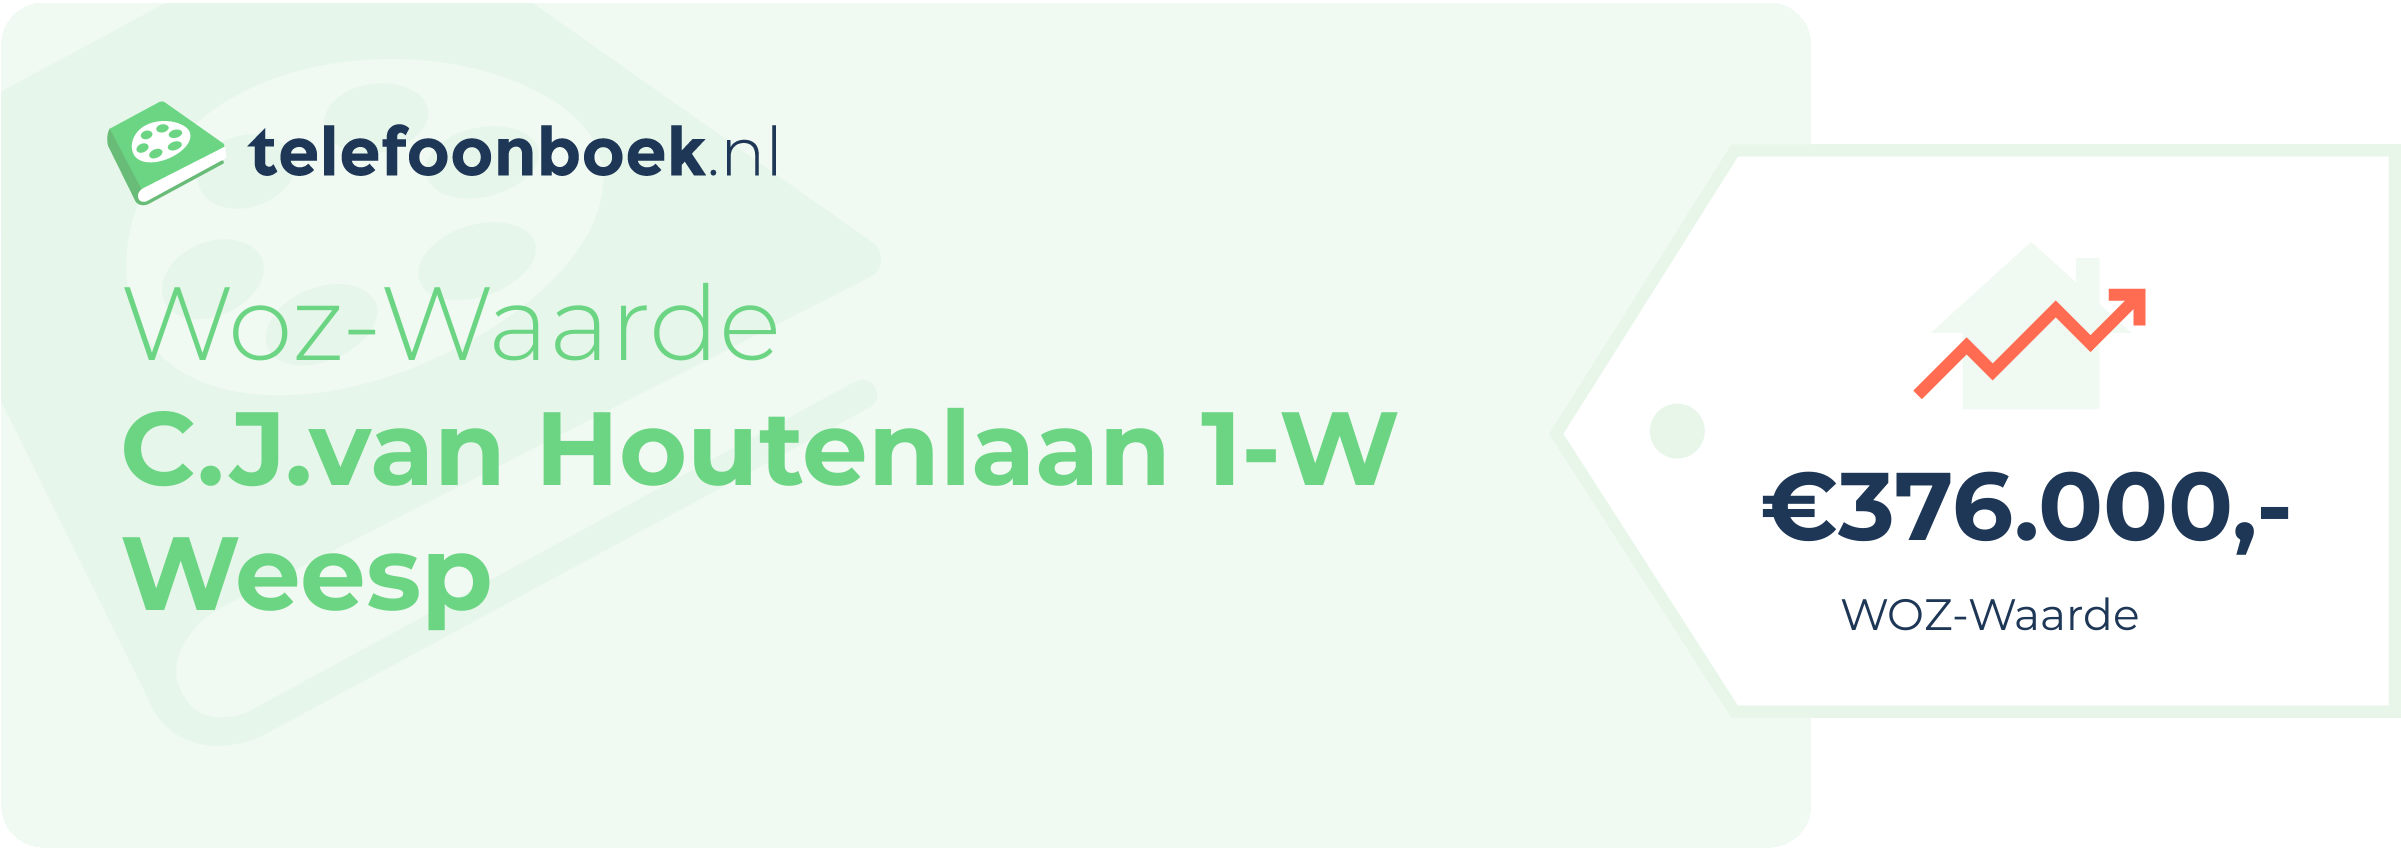 WOZ-waarde C.J.van Houtenlaan 1-W Weesp